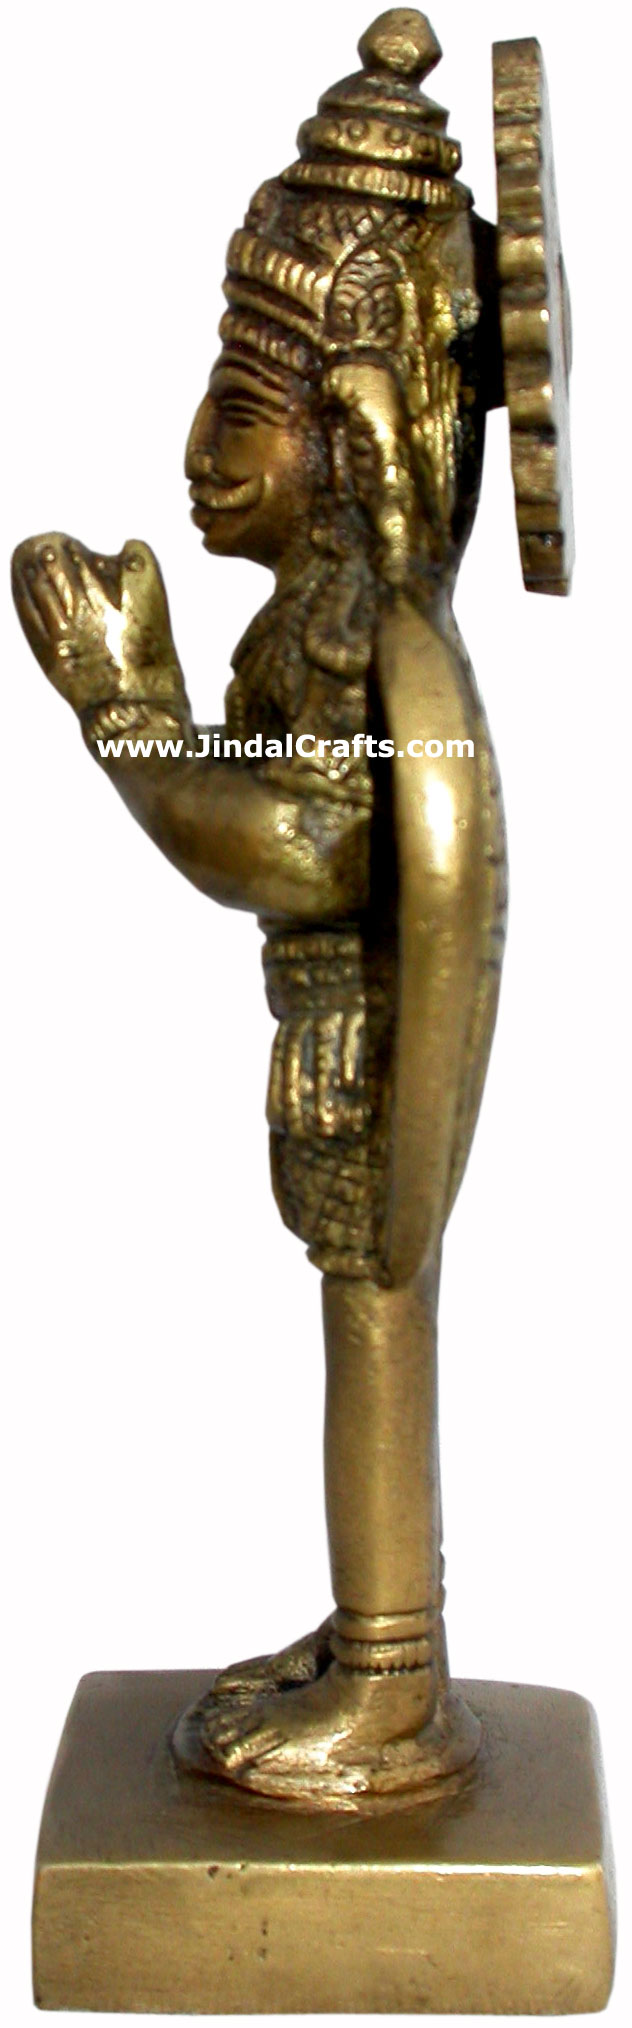 Garud - Hand Carved Indian Art Craft Handicraft Home Decor Brass Figurine